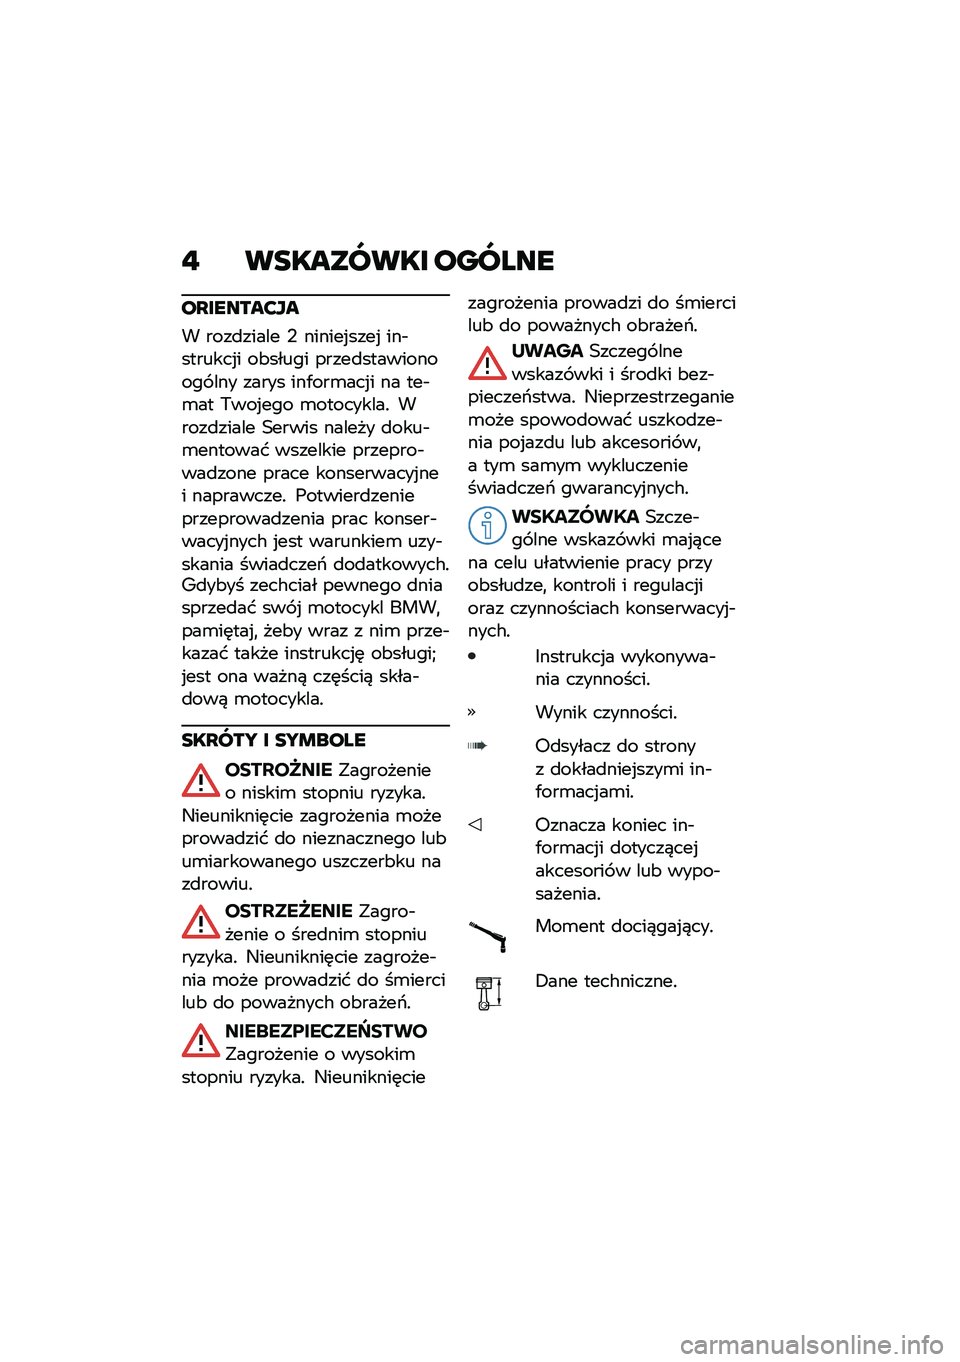 BMW MOTORRAD R NINE T 2020  Instrukcja obsługi (in Polish) �" ��������� ������
��Q������?��
� ����
����� �, ������%����% ���$�������%� ��&����� �����
����������� ��� ����� ���.��